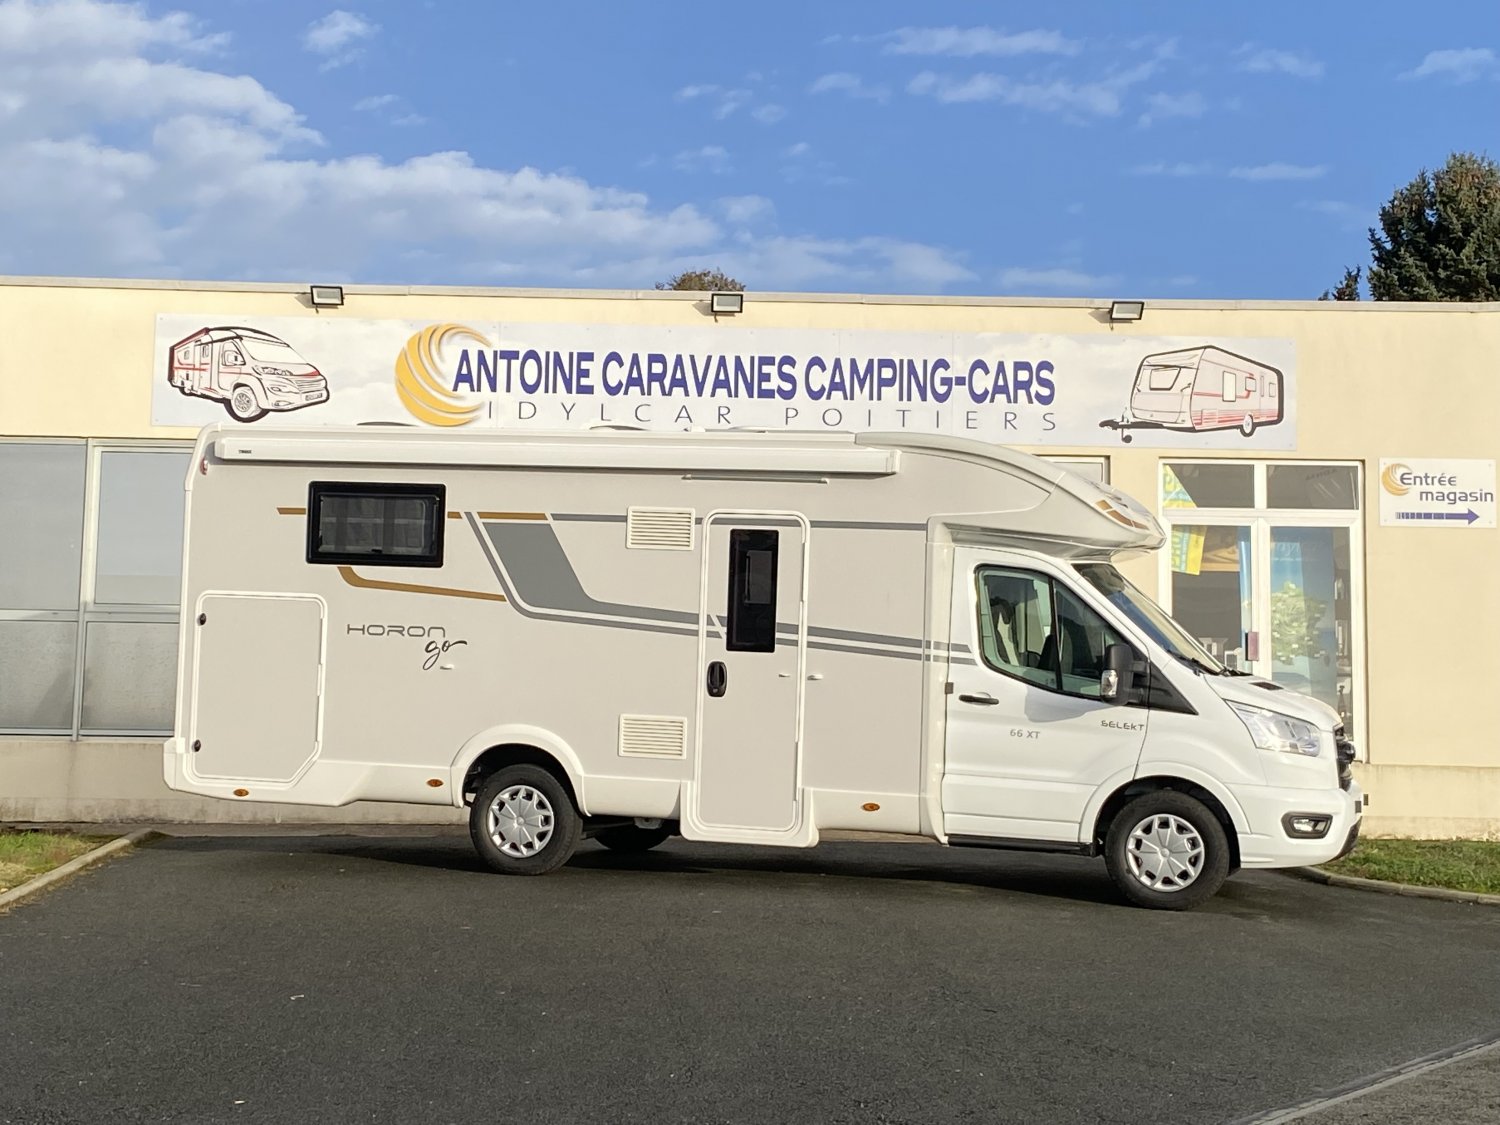 Antoine Caravanes et Camping Car Horon GO 66 XT C.I.